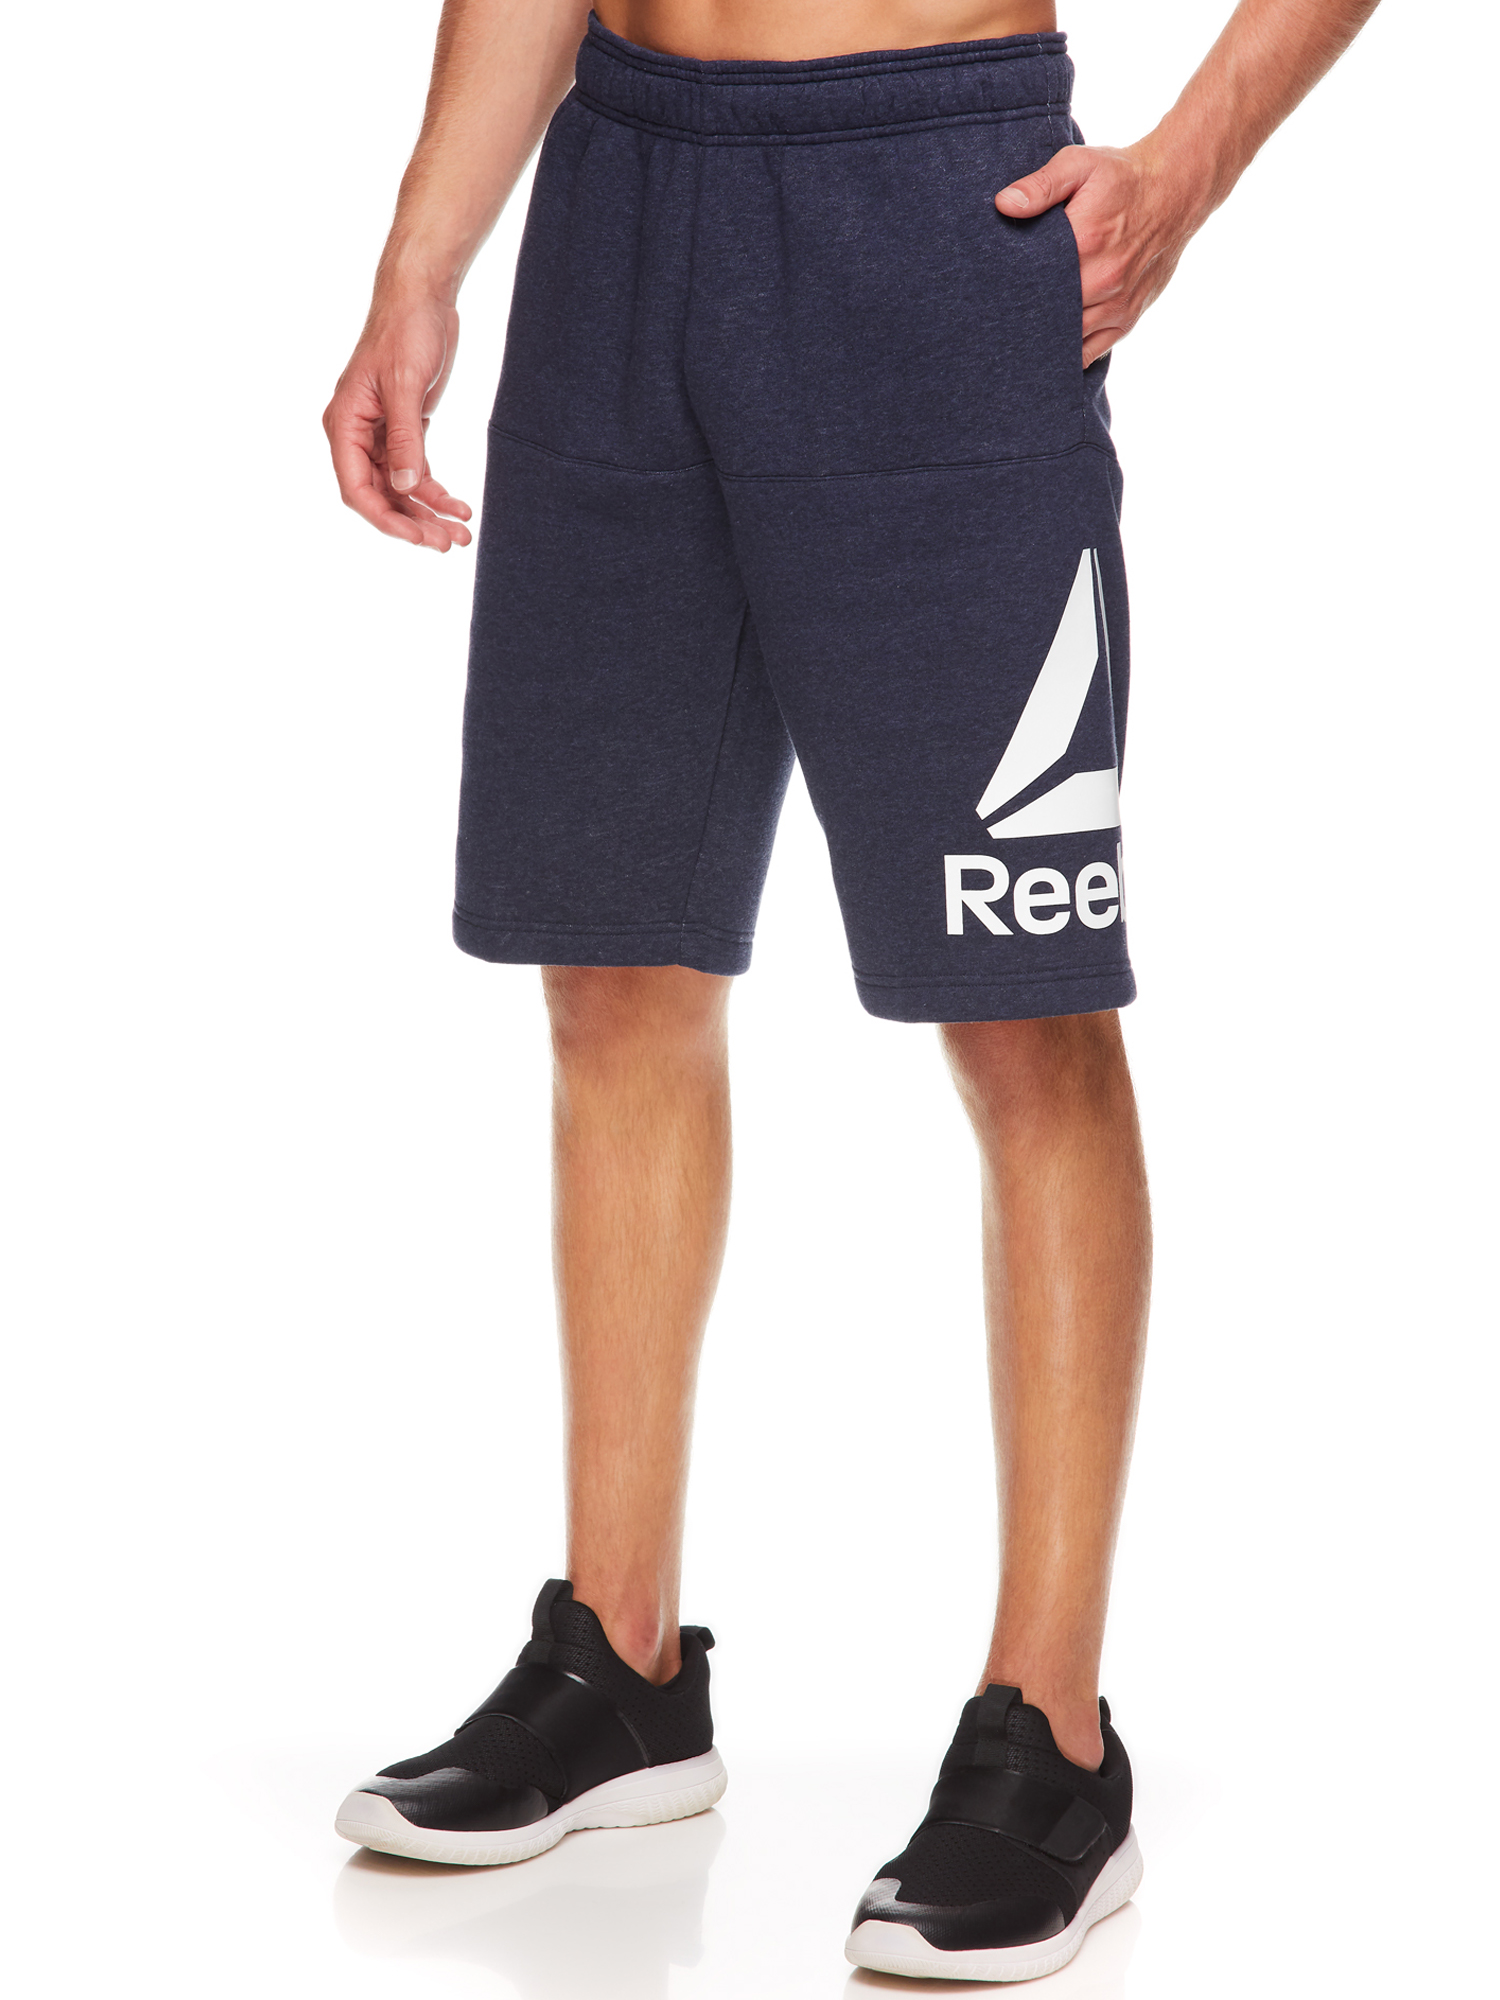 Reebok Men's Low Lift Fleece Shorts - image 3 of 4